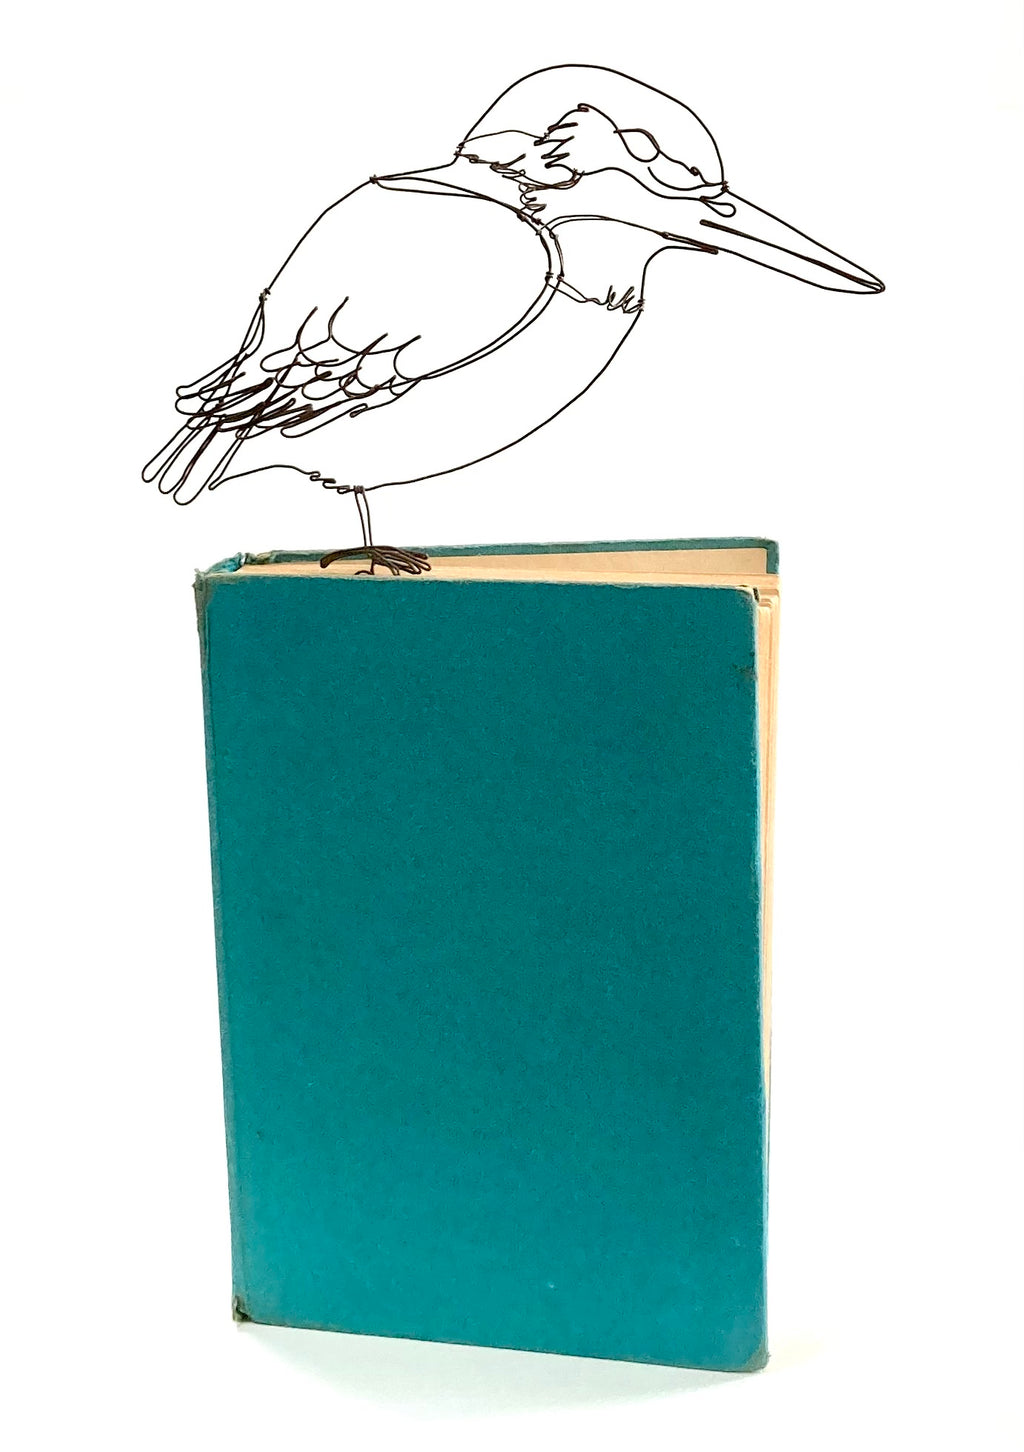 Kingfisher On Vintage Book